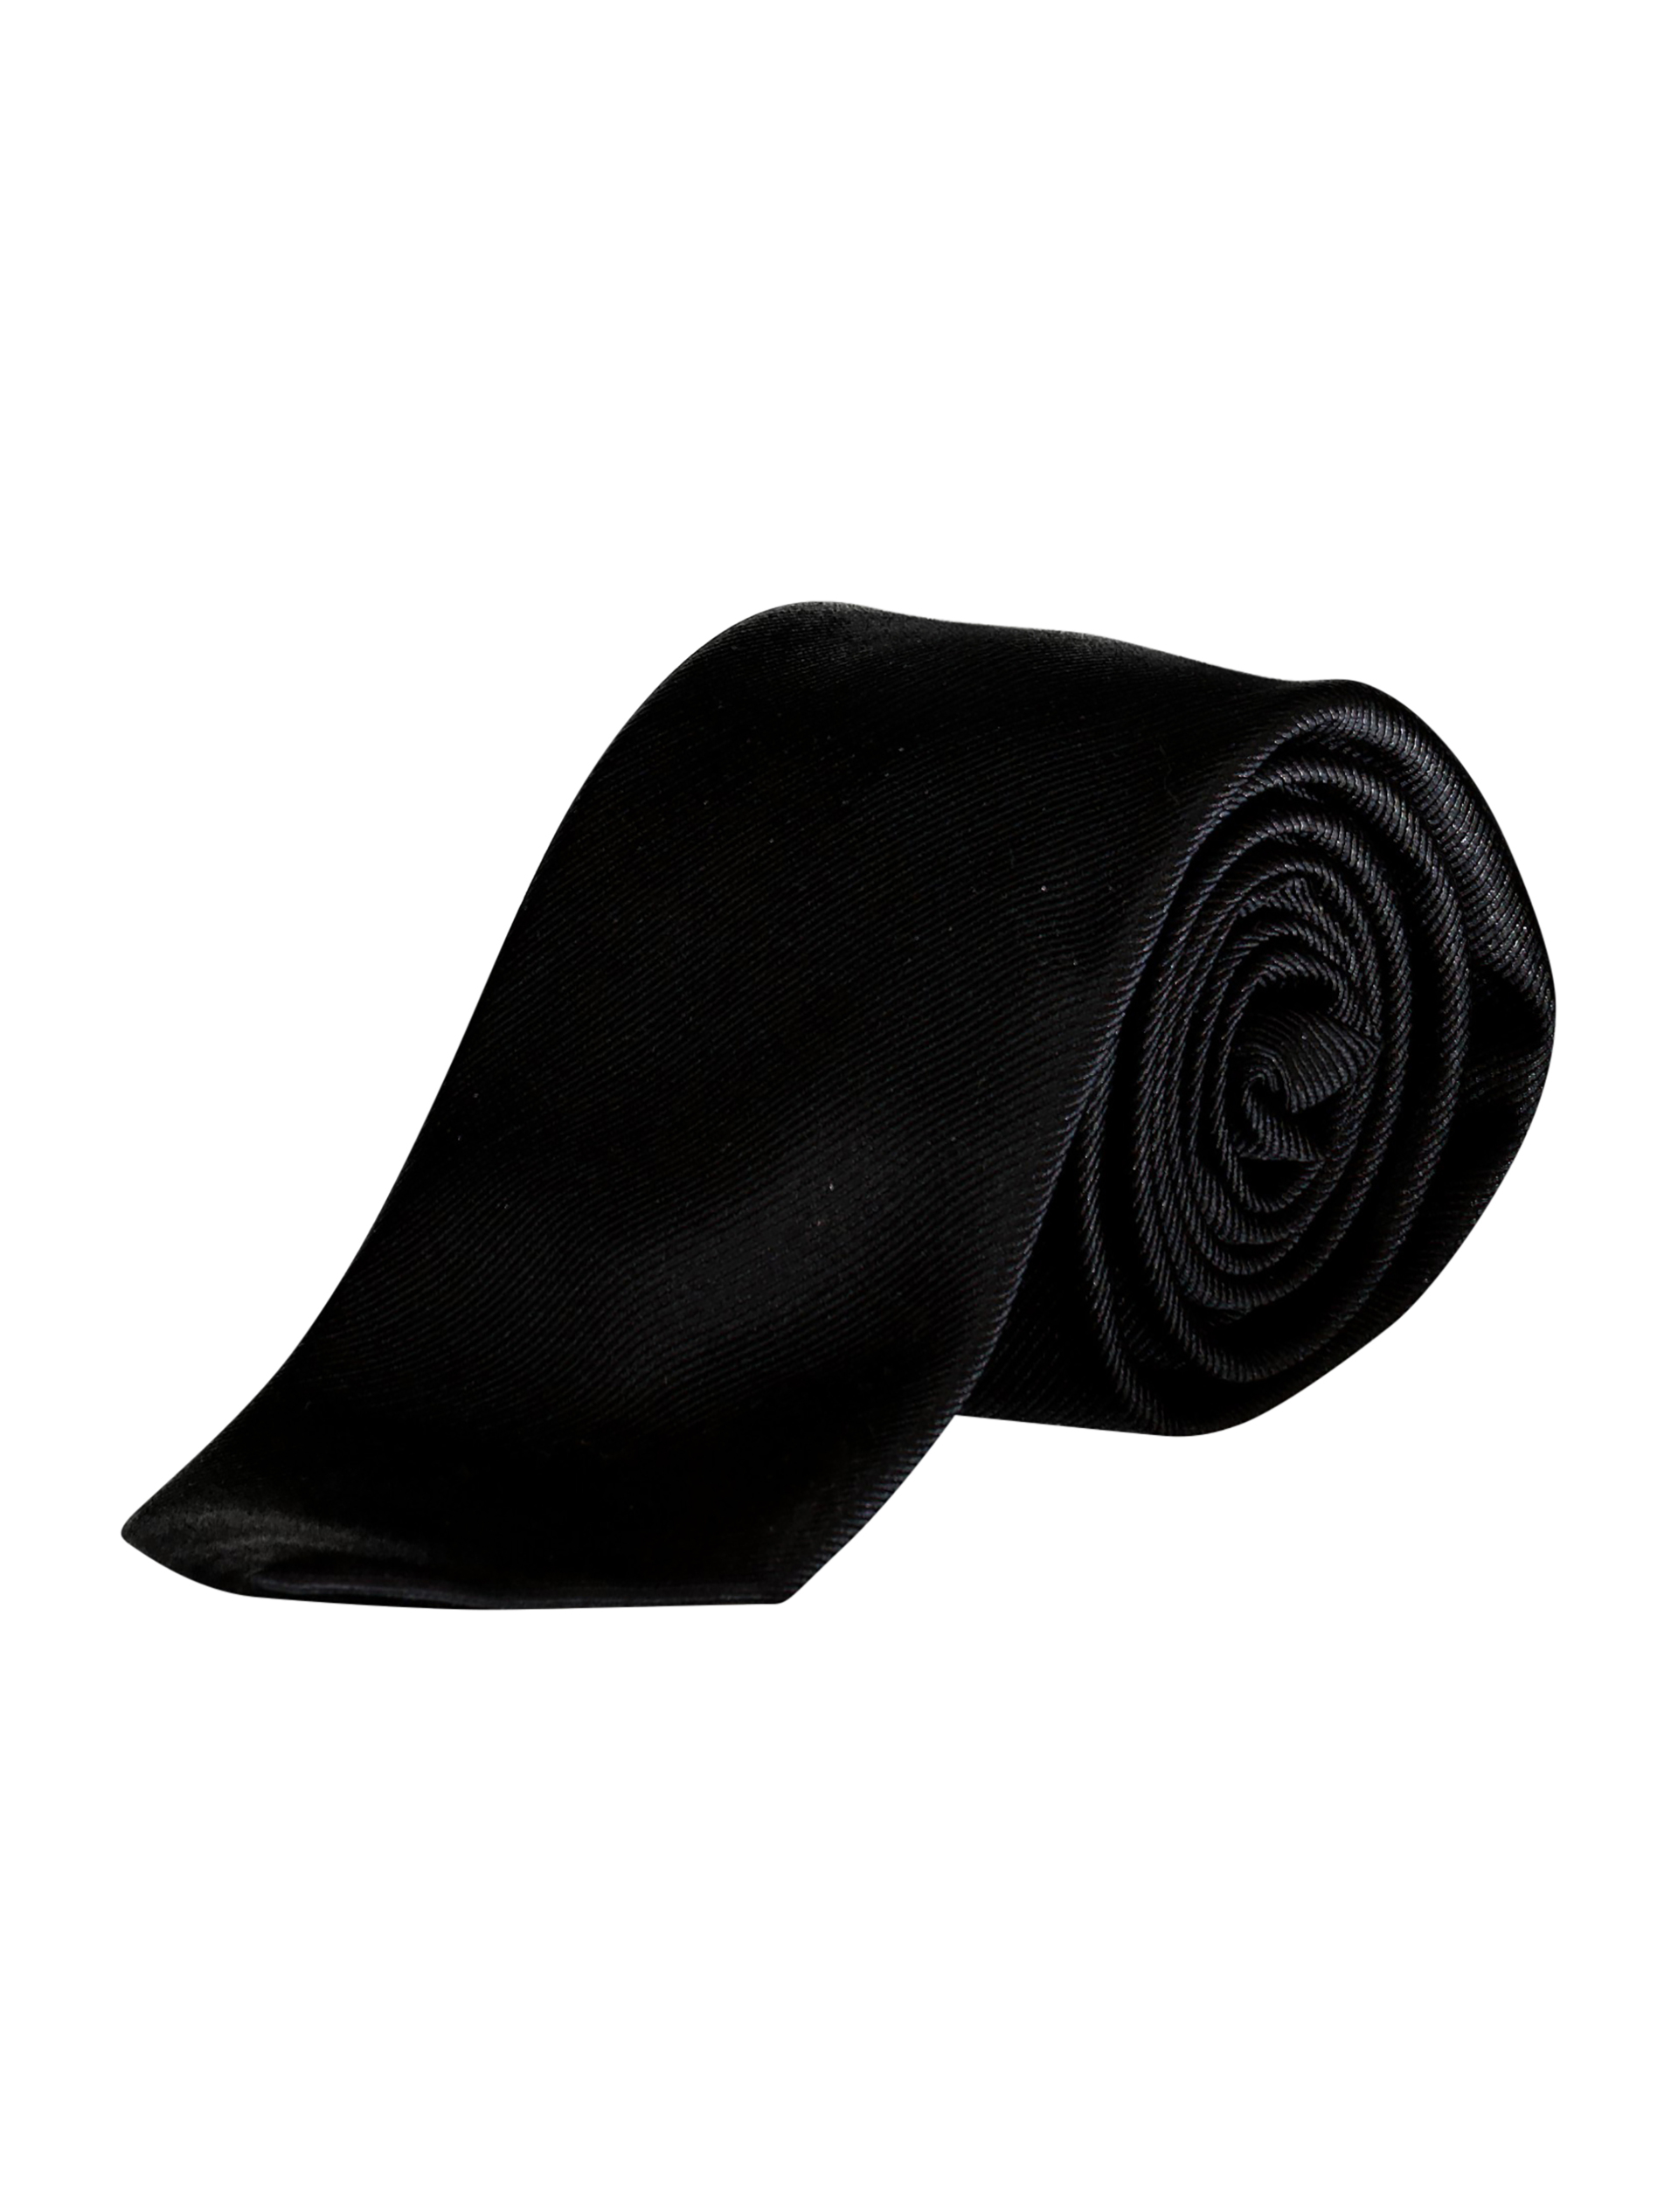 Connexion Krawatte schwarz / ag black